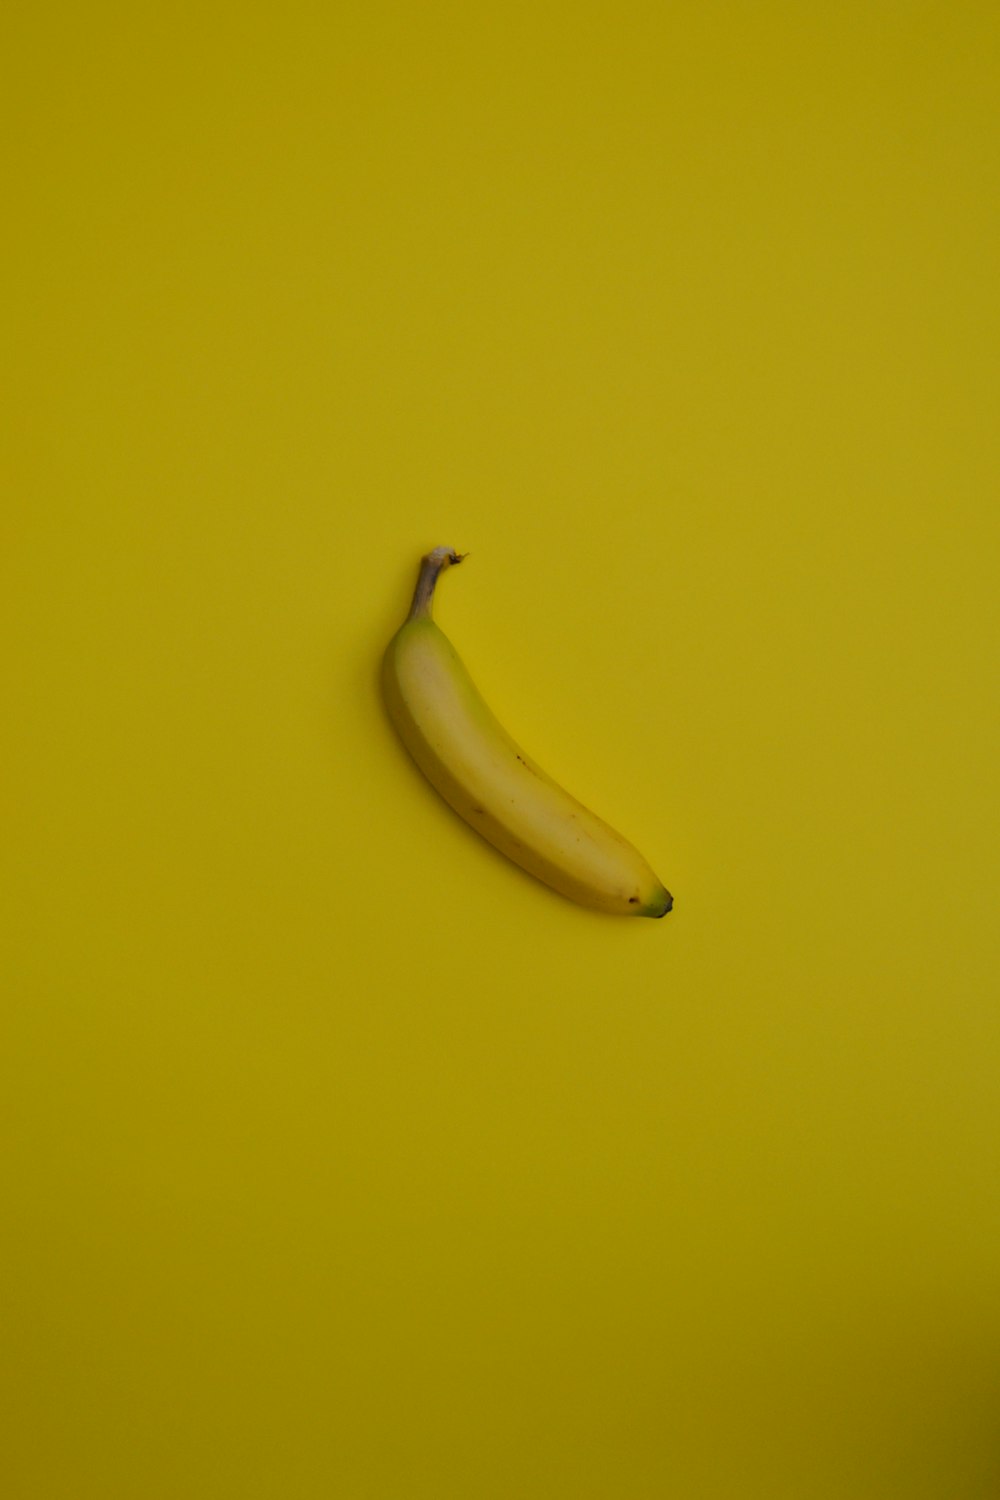 yellow banana fruit on yellow surface